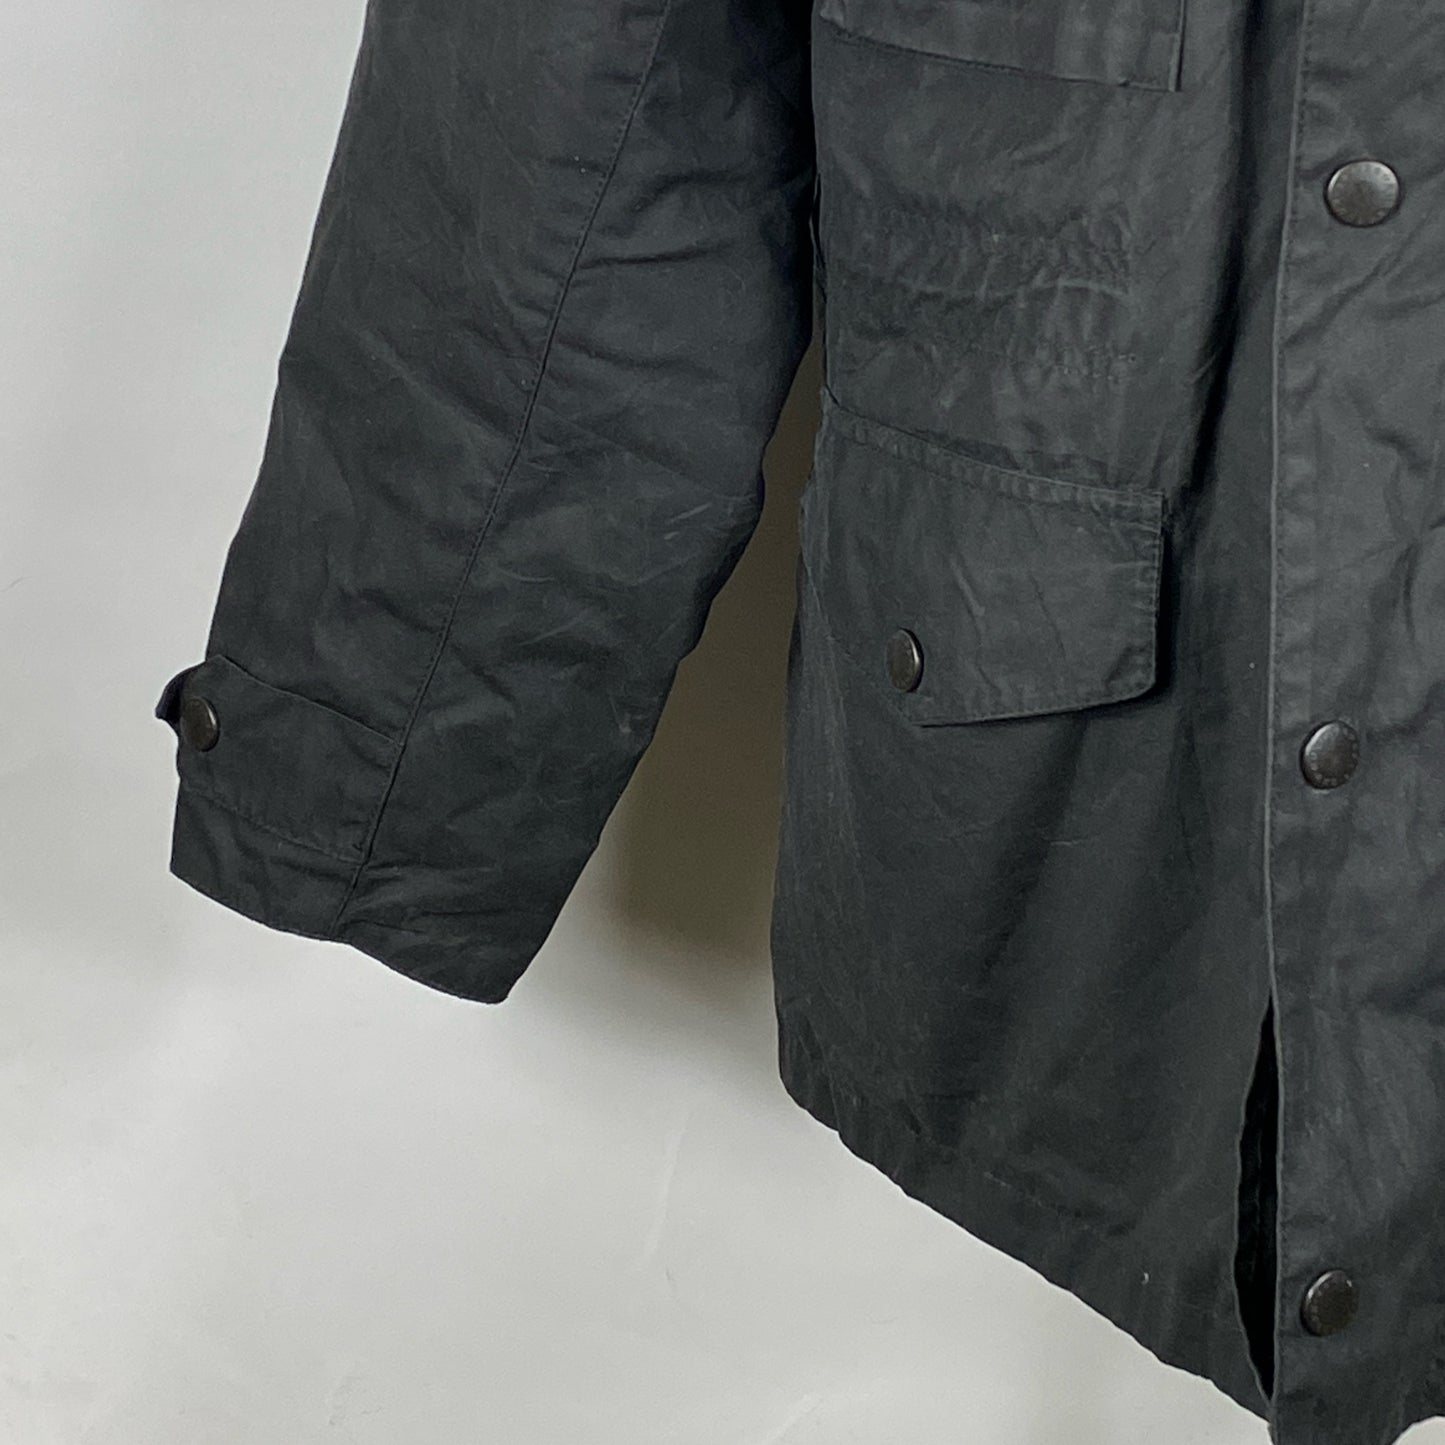 Barbour Giacca Uomo Sapper Nera cerata Medium - Black Sapper Wax Jacket Size M